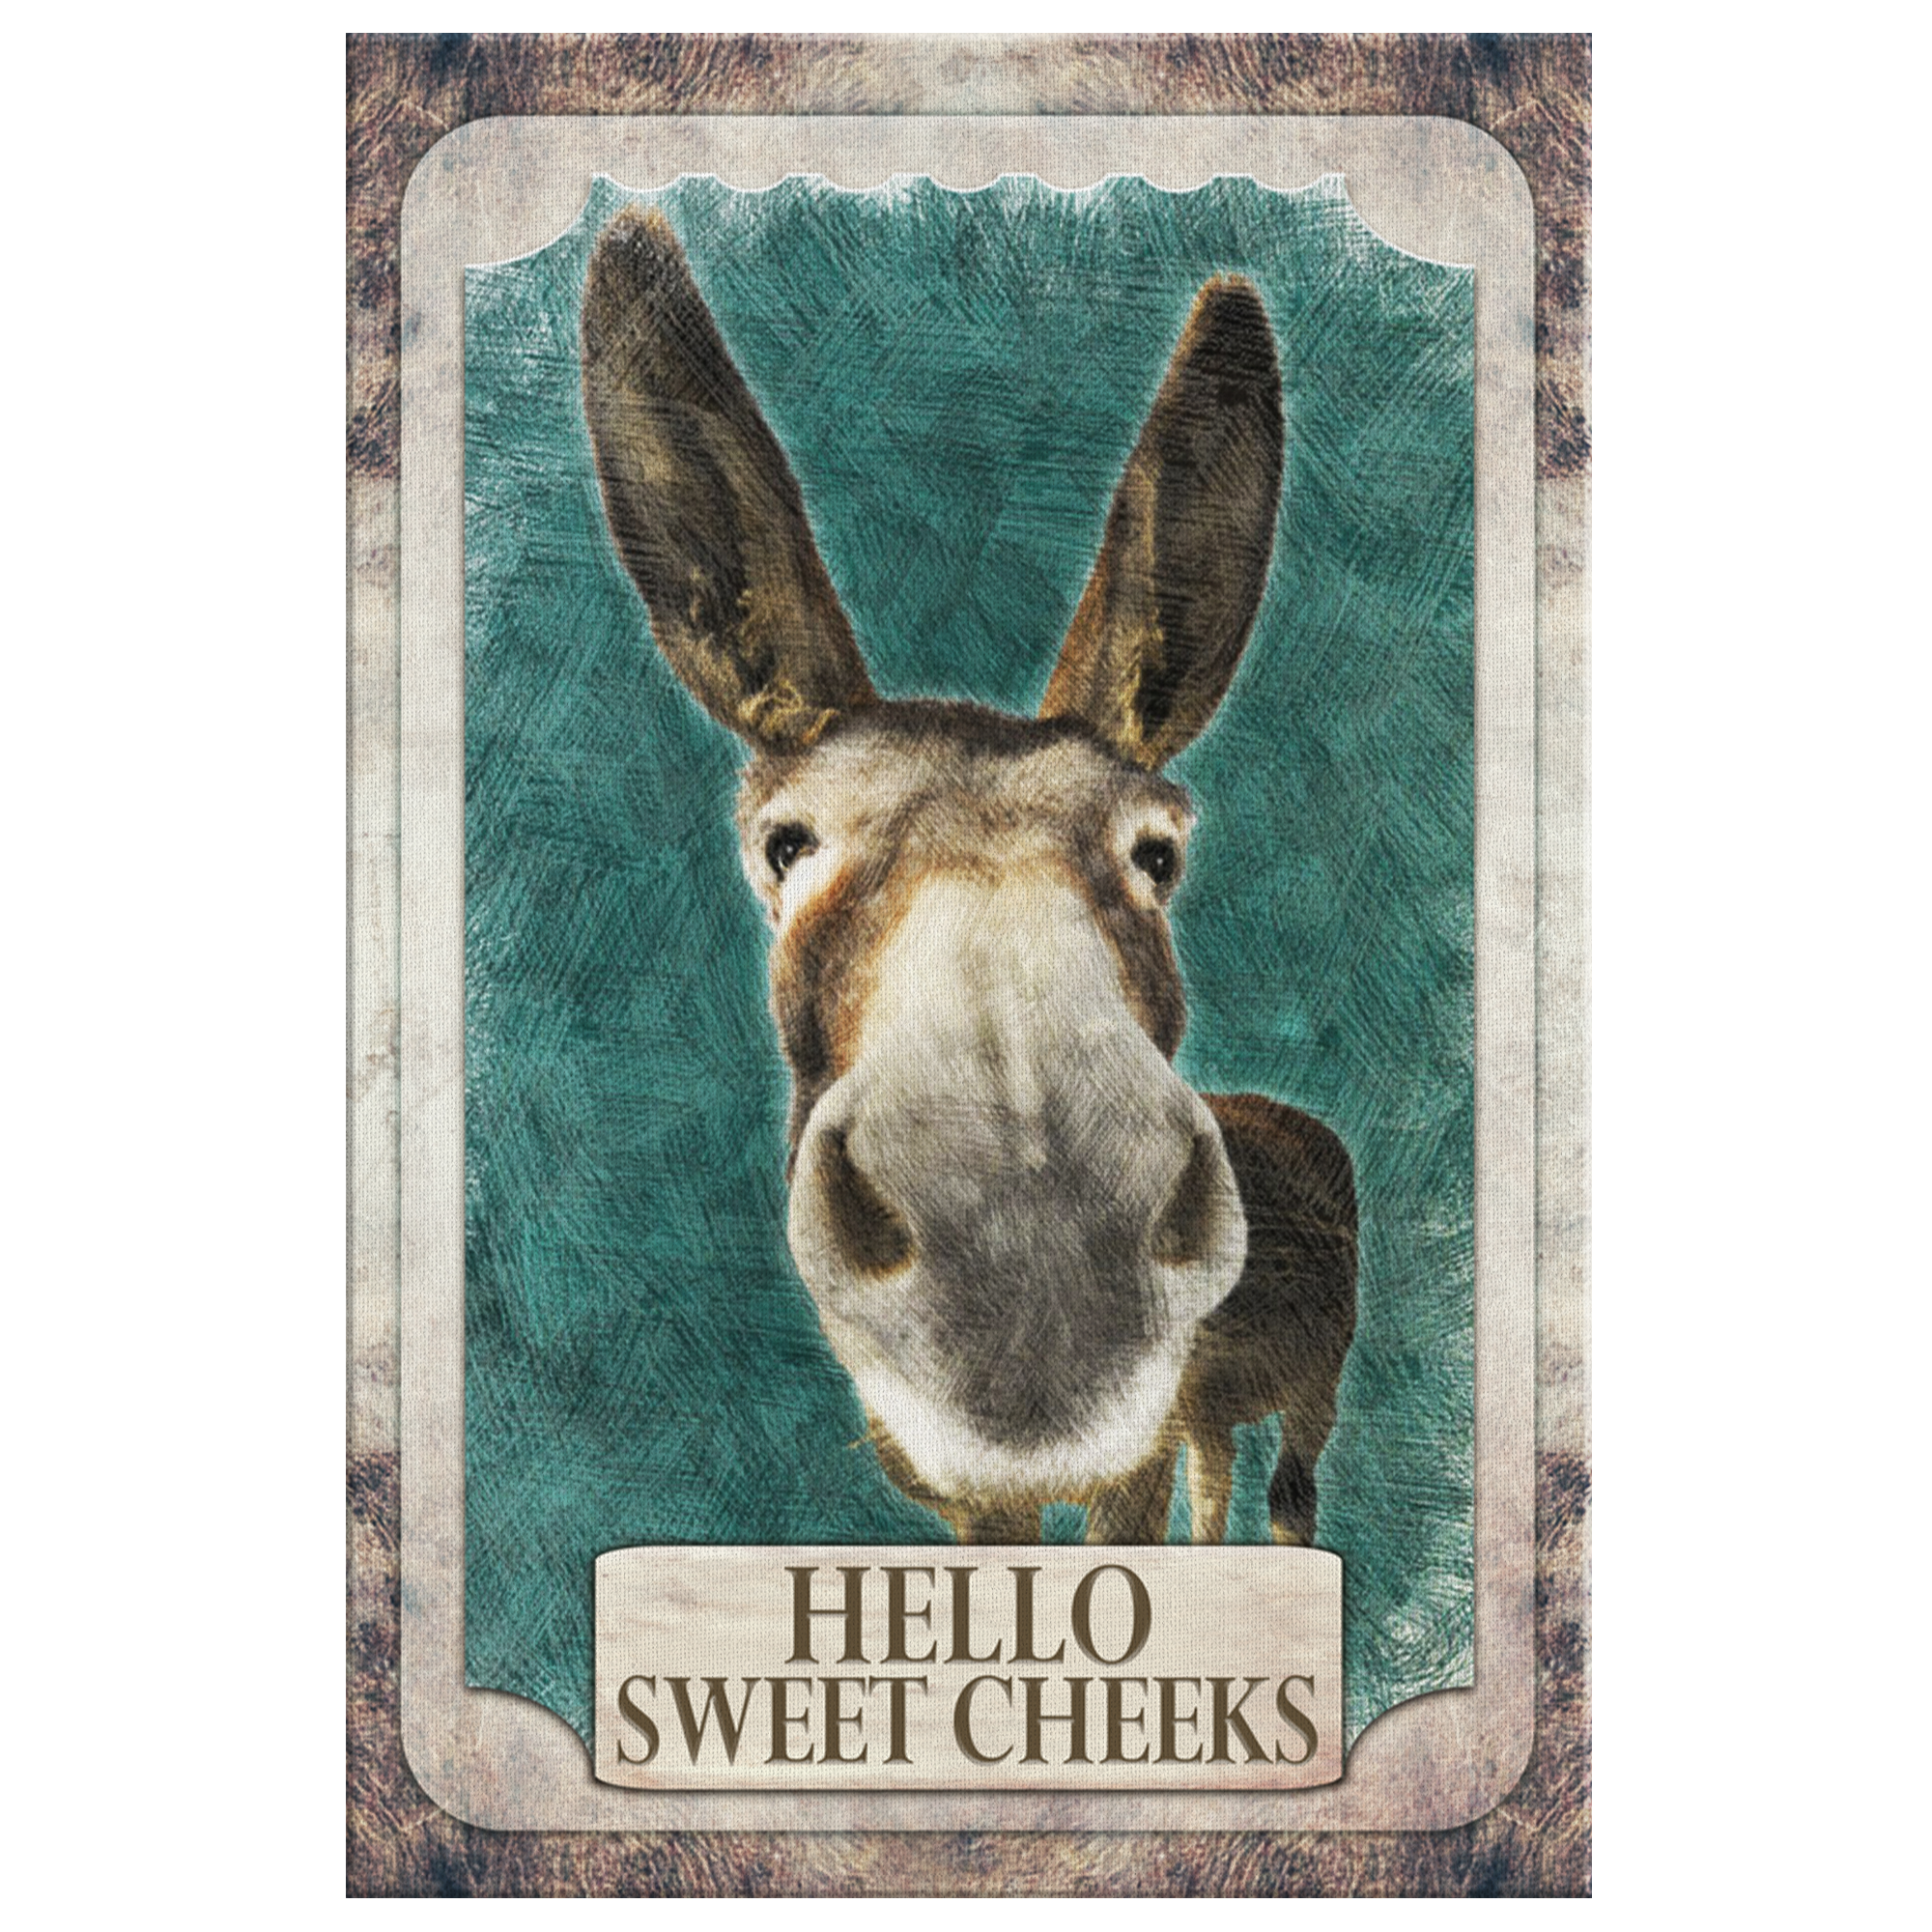 "Hello Sweet Cheeks" Bathroom Premium Canvas Wall Art